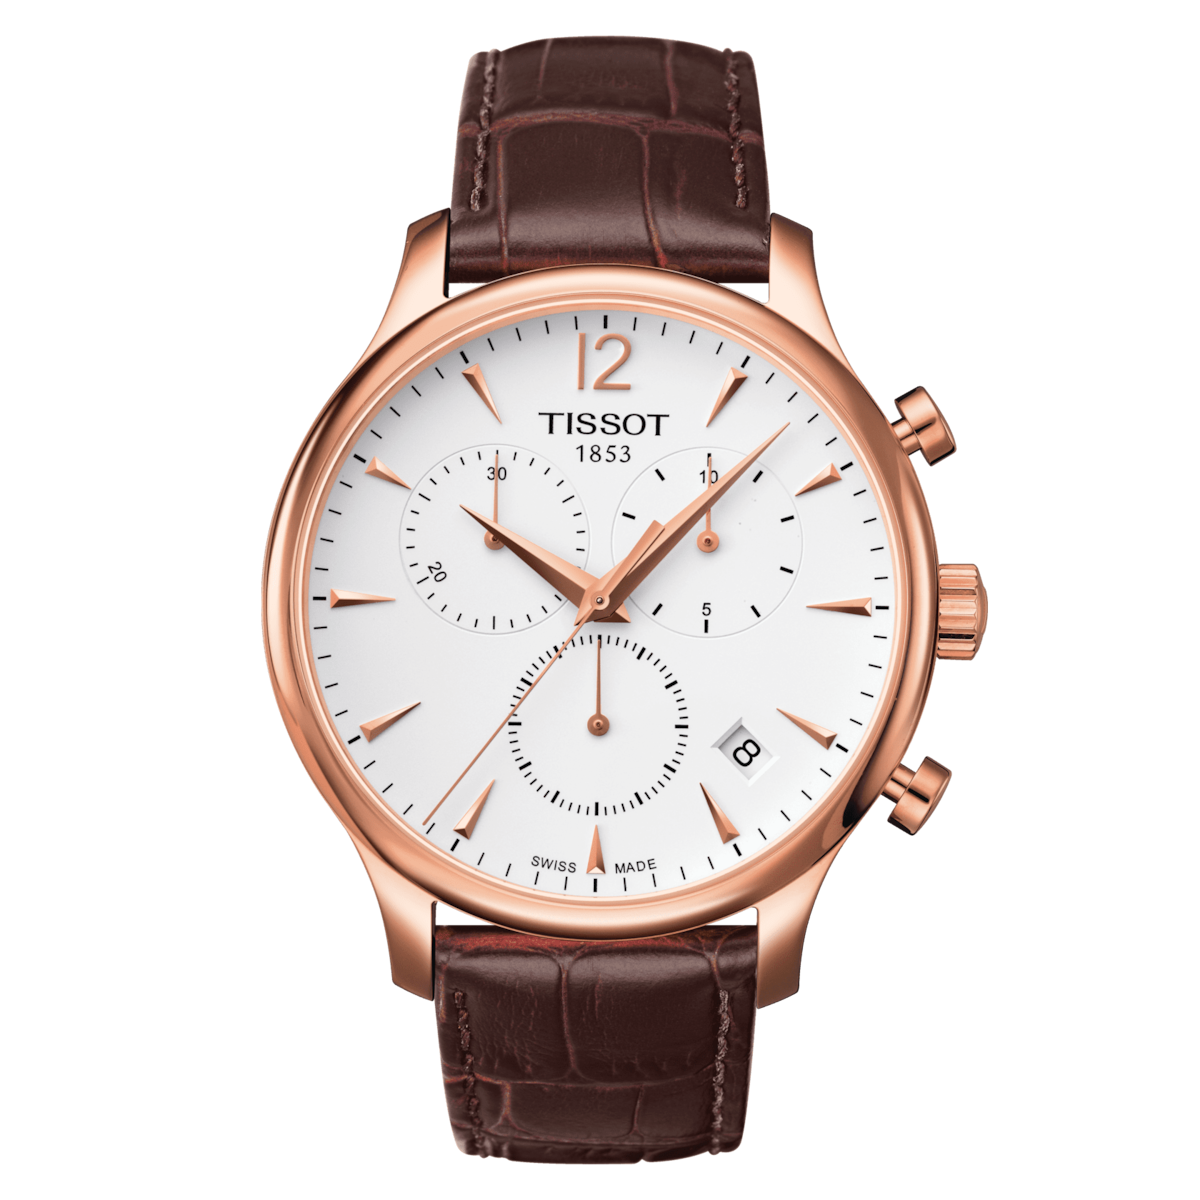 Tissot Tradition Chronograph - T063.617.36.037.00